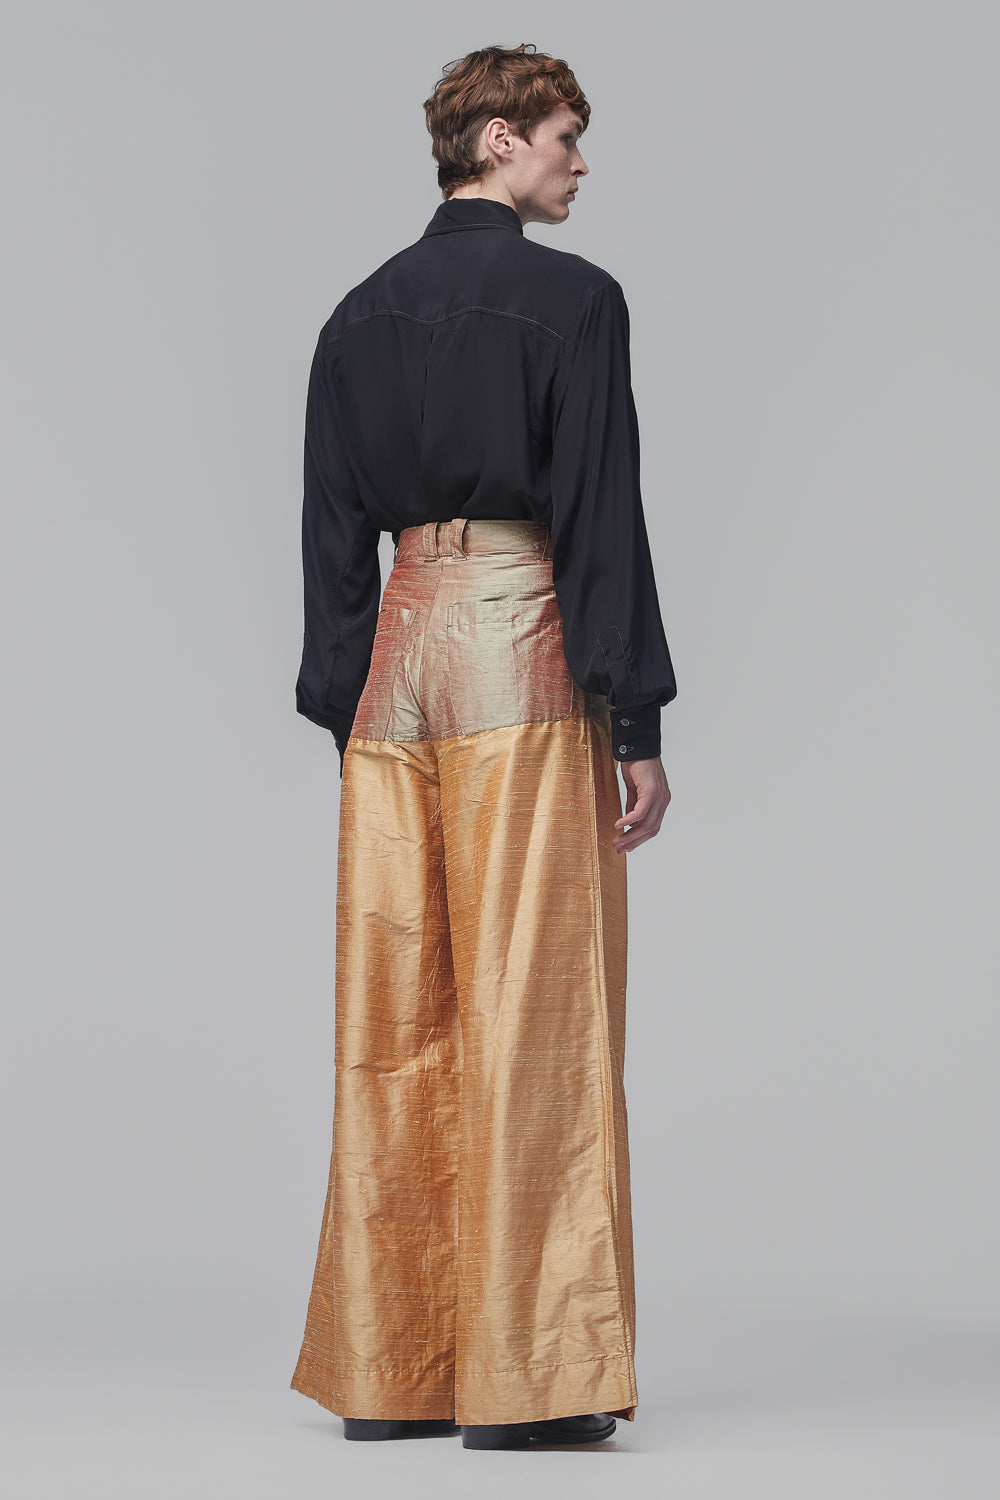 Pantalona com Pala Sinuosa em Shantungs de Seda Laranja-Claro e Changeant Menta e Goiaba